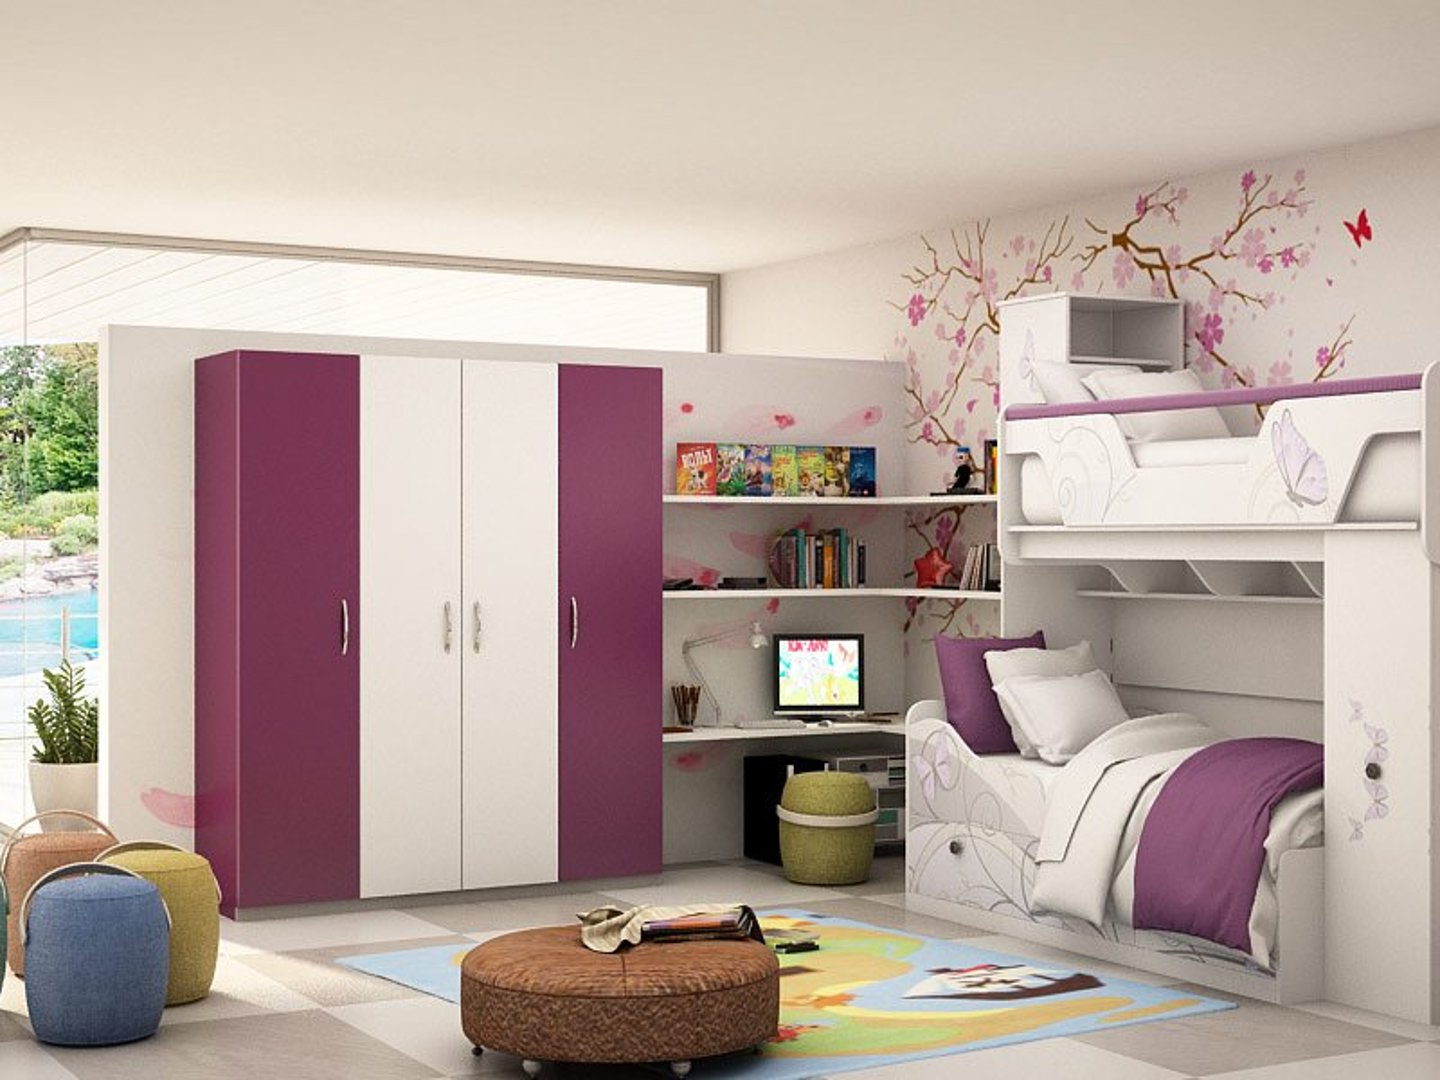 Wardrobe Colour Combinations For Your Bedroom Decor Homelane Blog